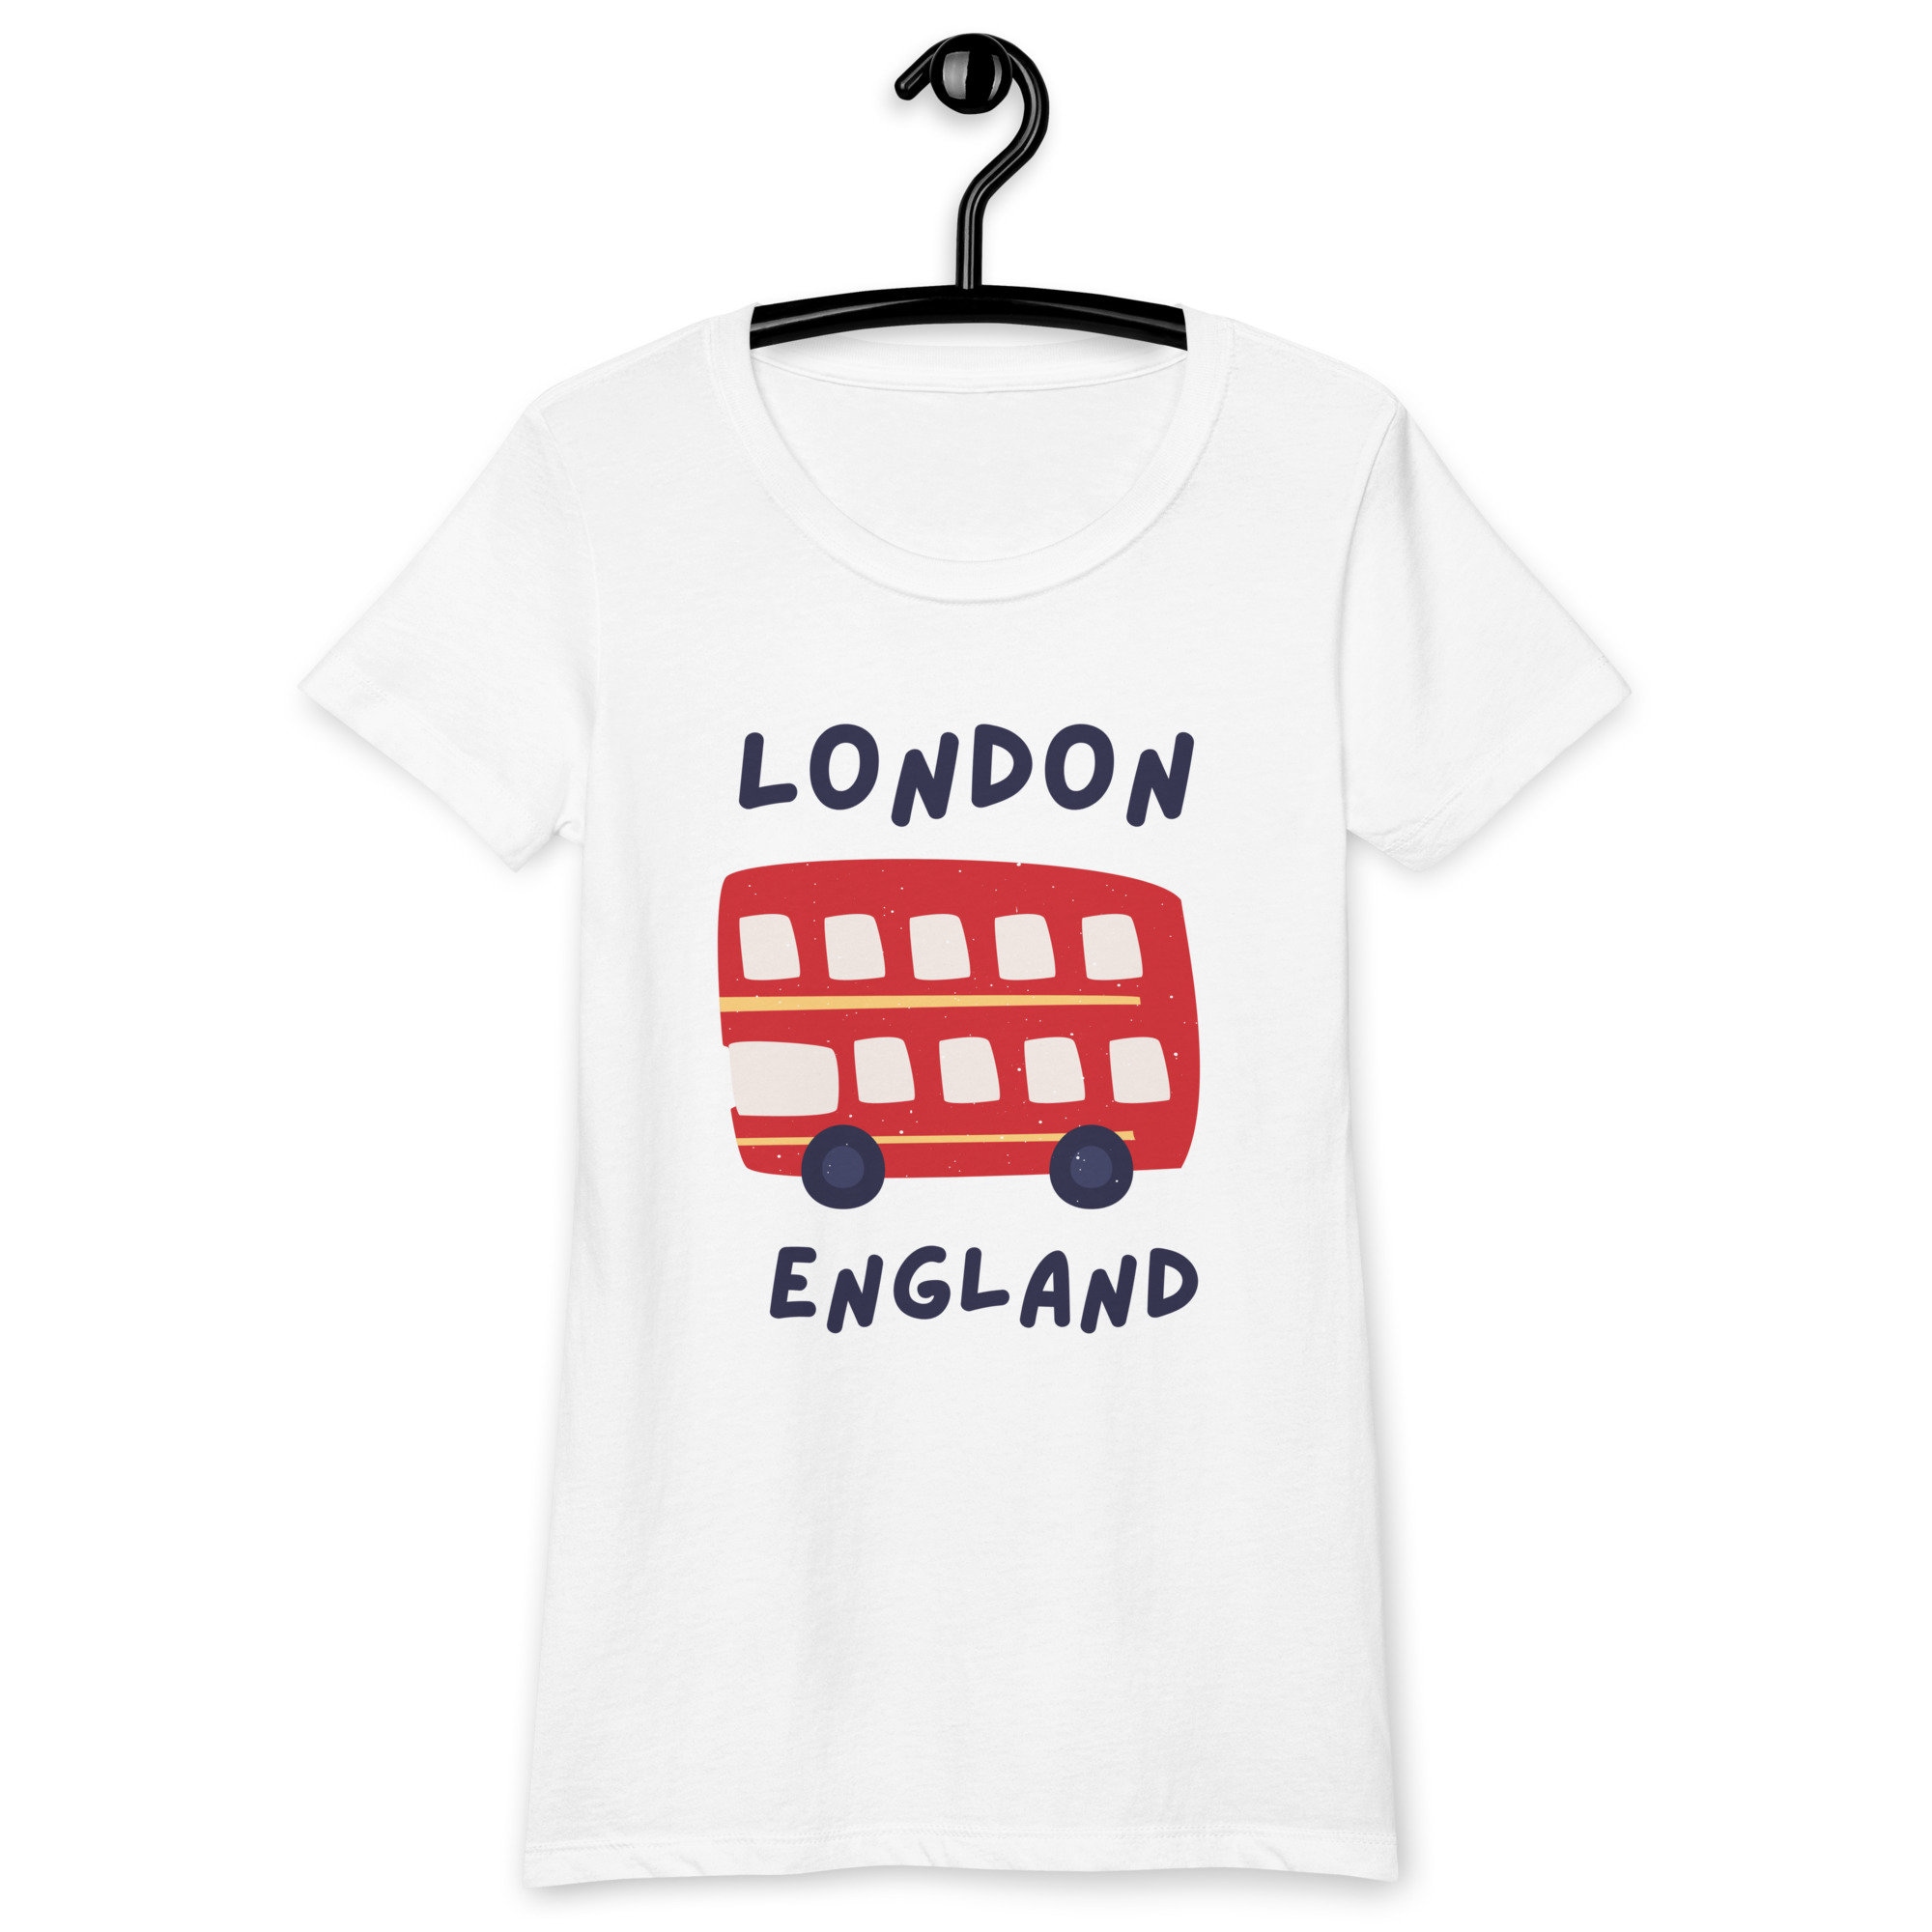 Discover London England London Bus Stop Printed Souvenir t-shirt